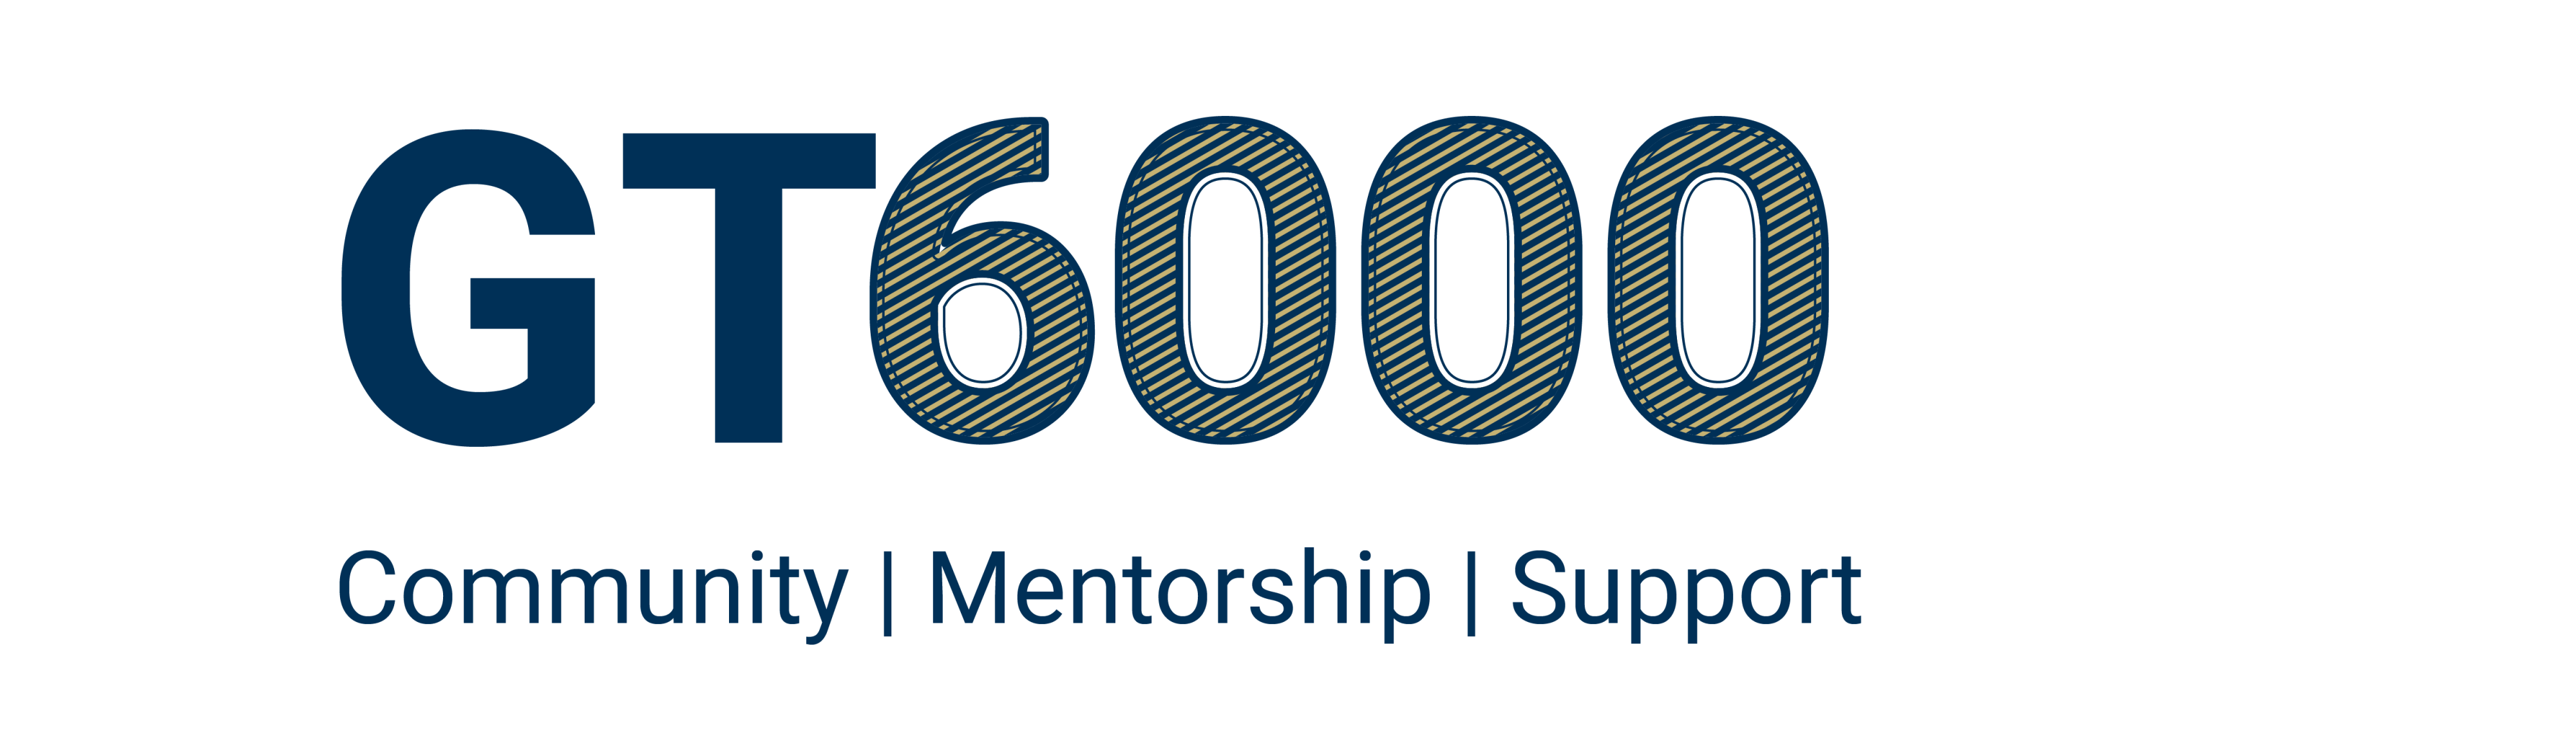 GT6000 Community, Mentorship, Support